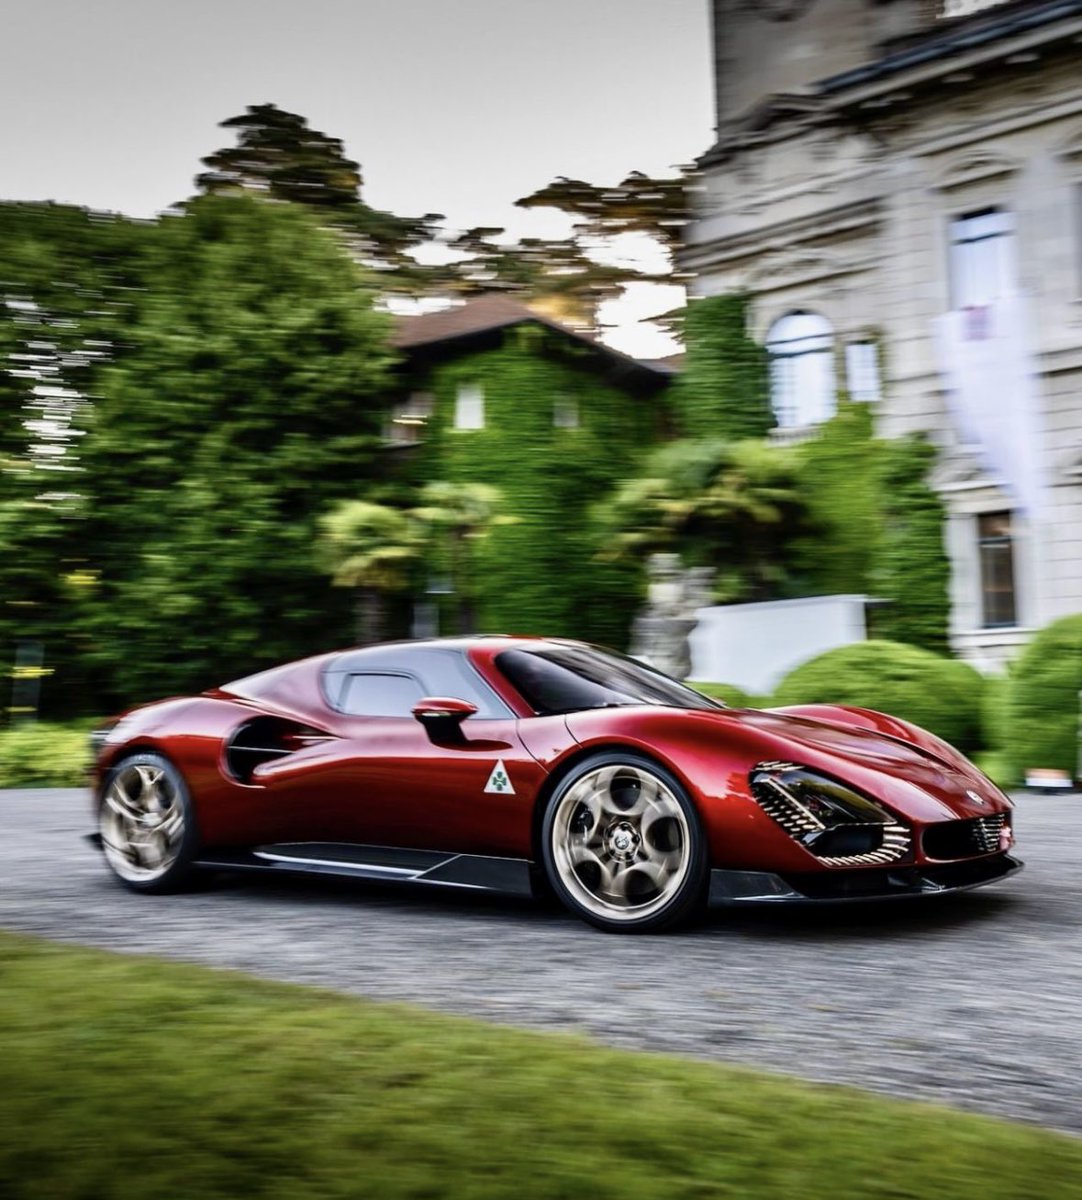 Most beautiful elegant design 🍀🇮🇹
#Alfa #AlfaRomeo #AlfaRomeo33Stradale #Supercar #Italian #Design #Exotic